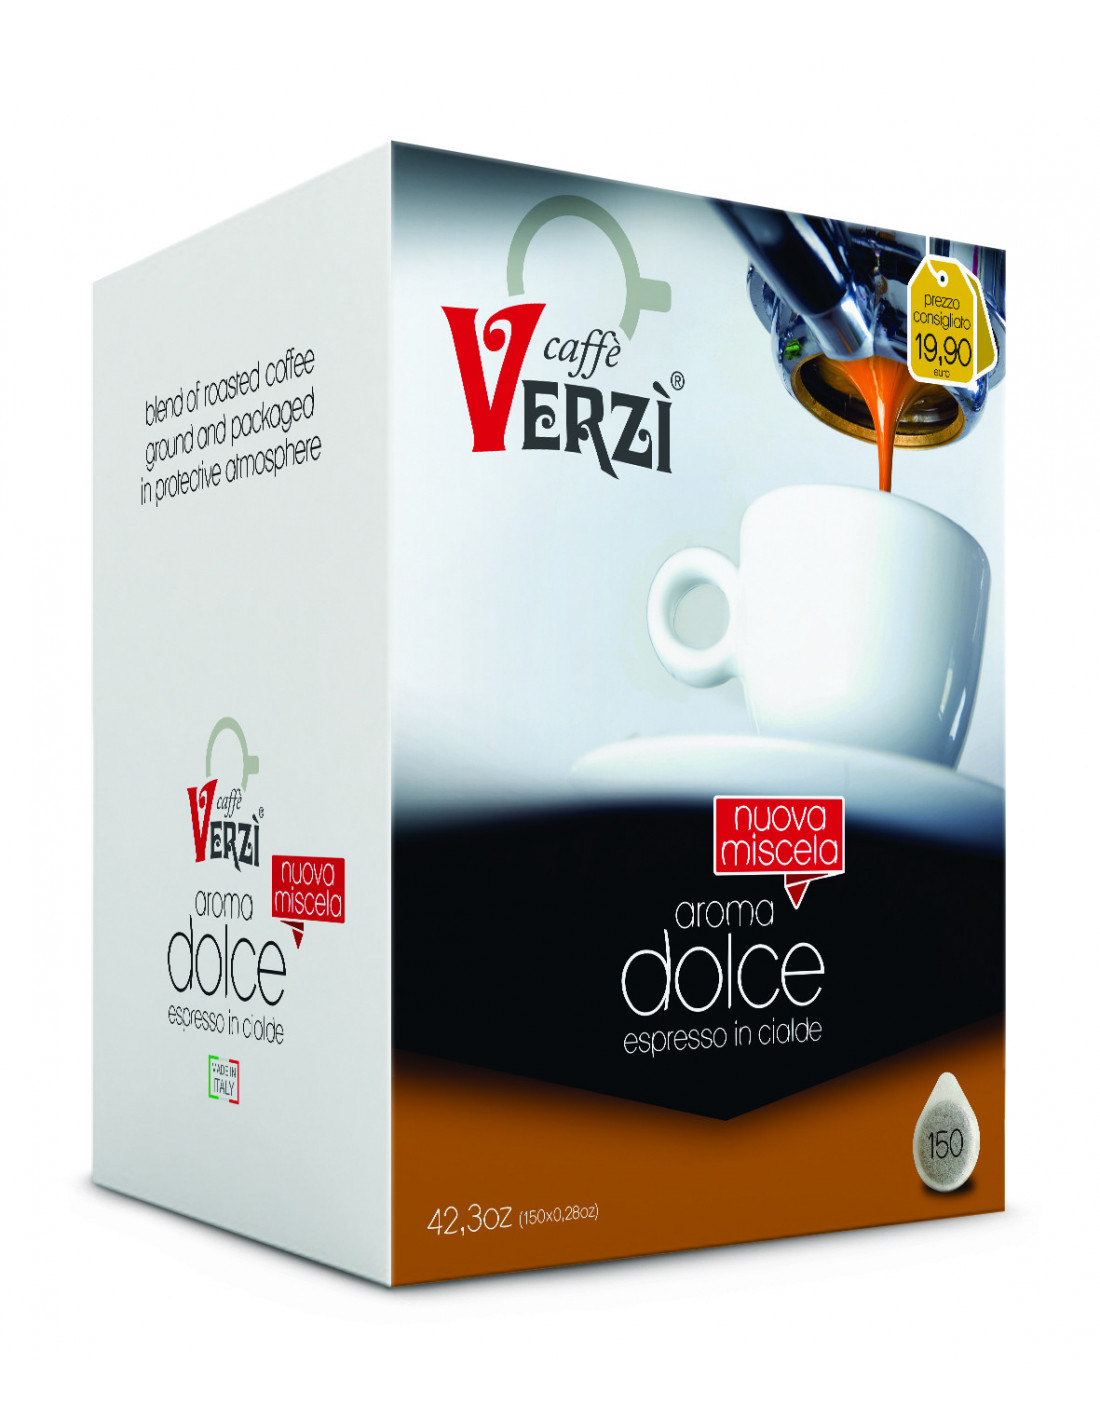 MIX 200 Cialde Caffè Borbone Filtro Carta ESE 44 mm 50 CIALDE